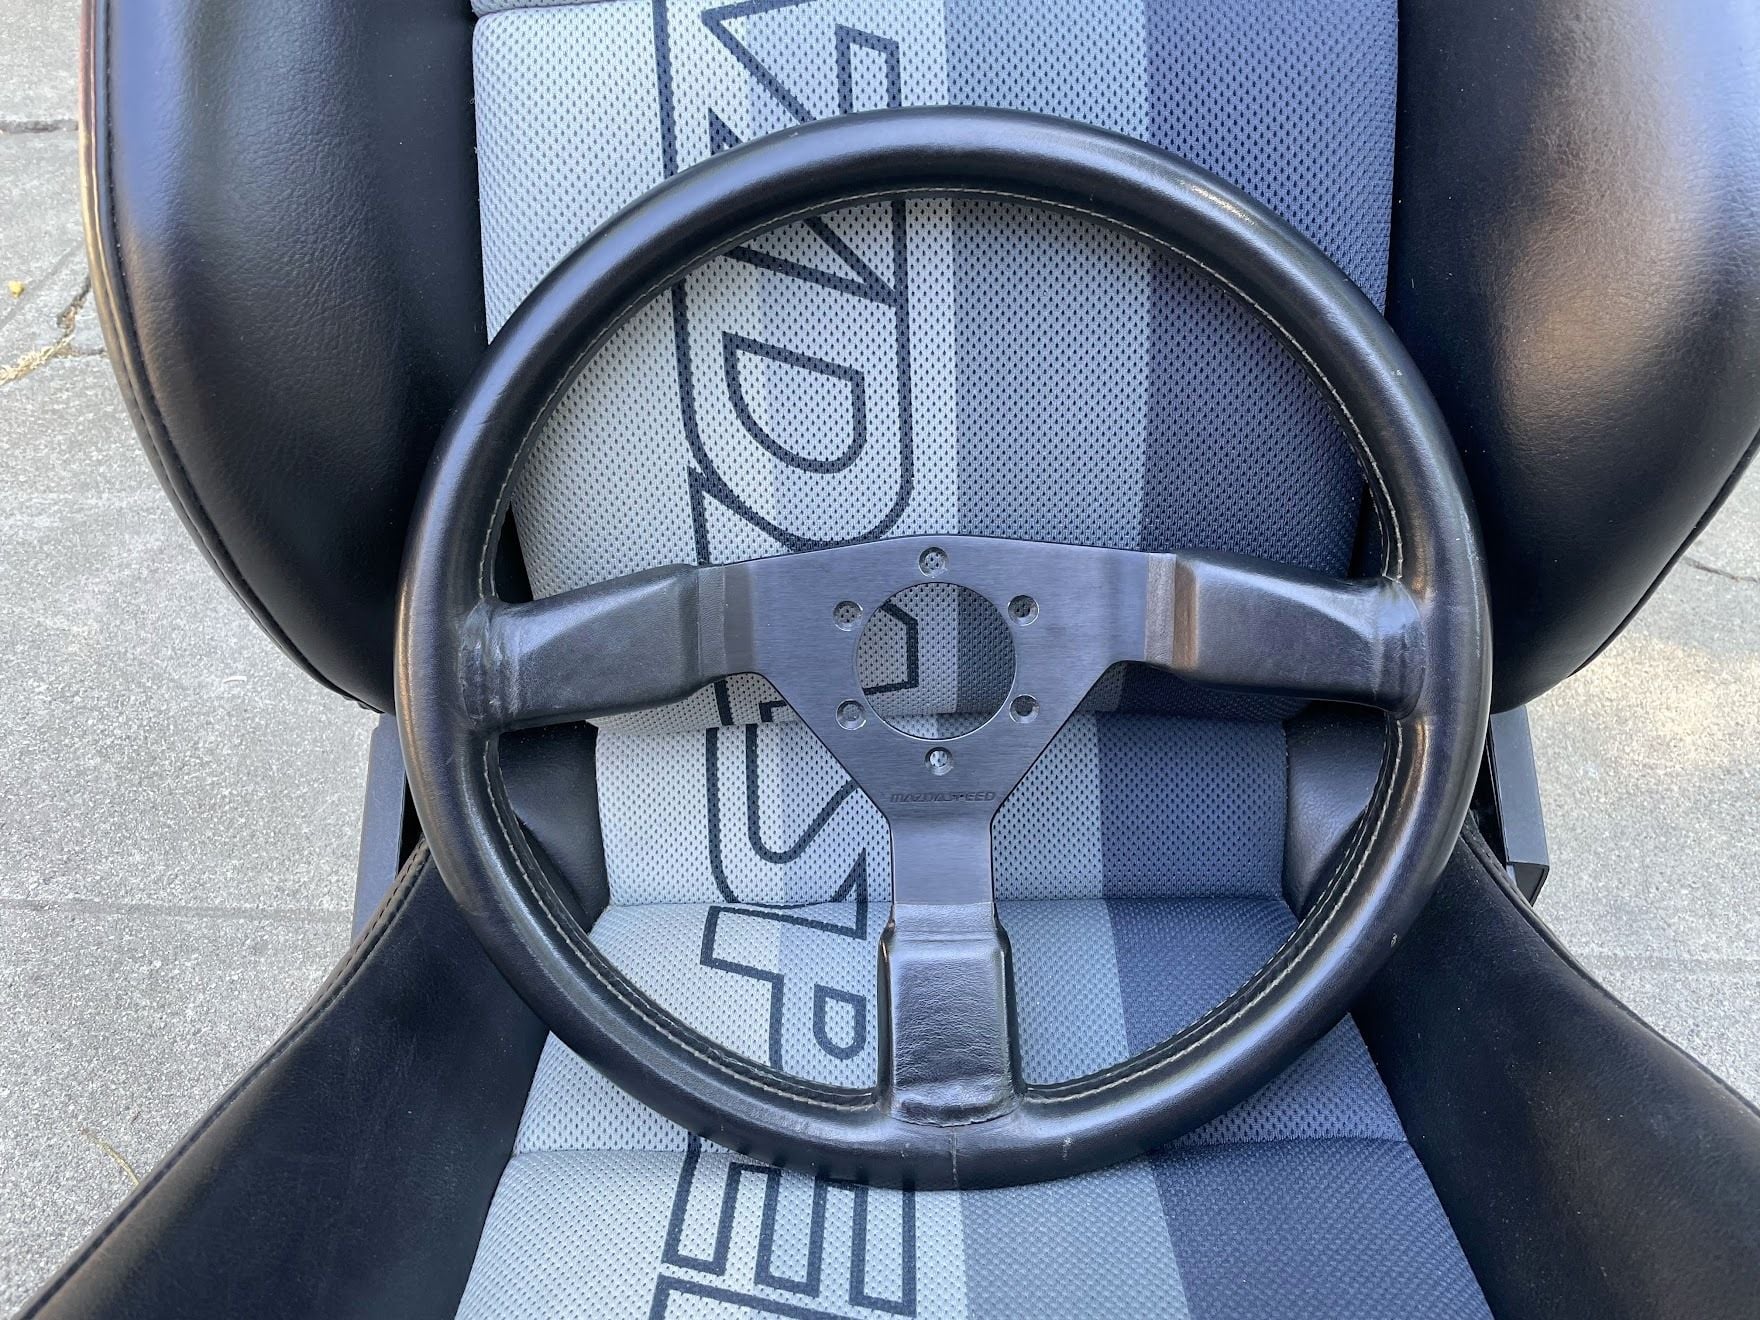 Accessories - MS Steering Wheel, Sakebomb QR Passenger Fire Bottle Mount - Used - 0  All Models - San Jose, CA 95112, United States